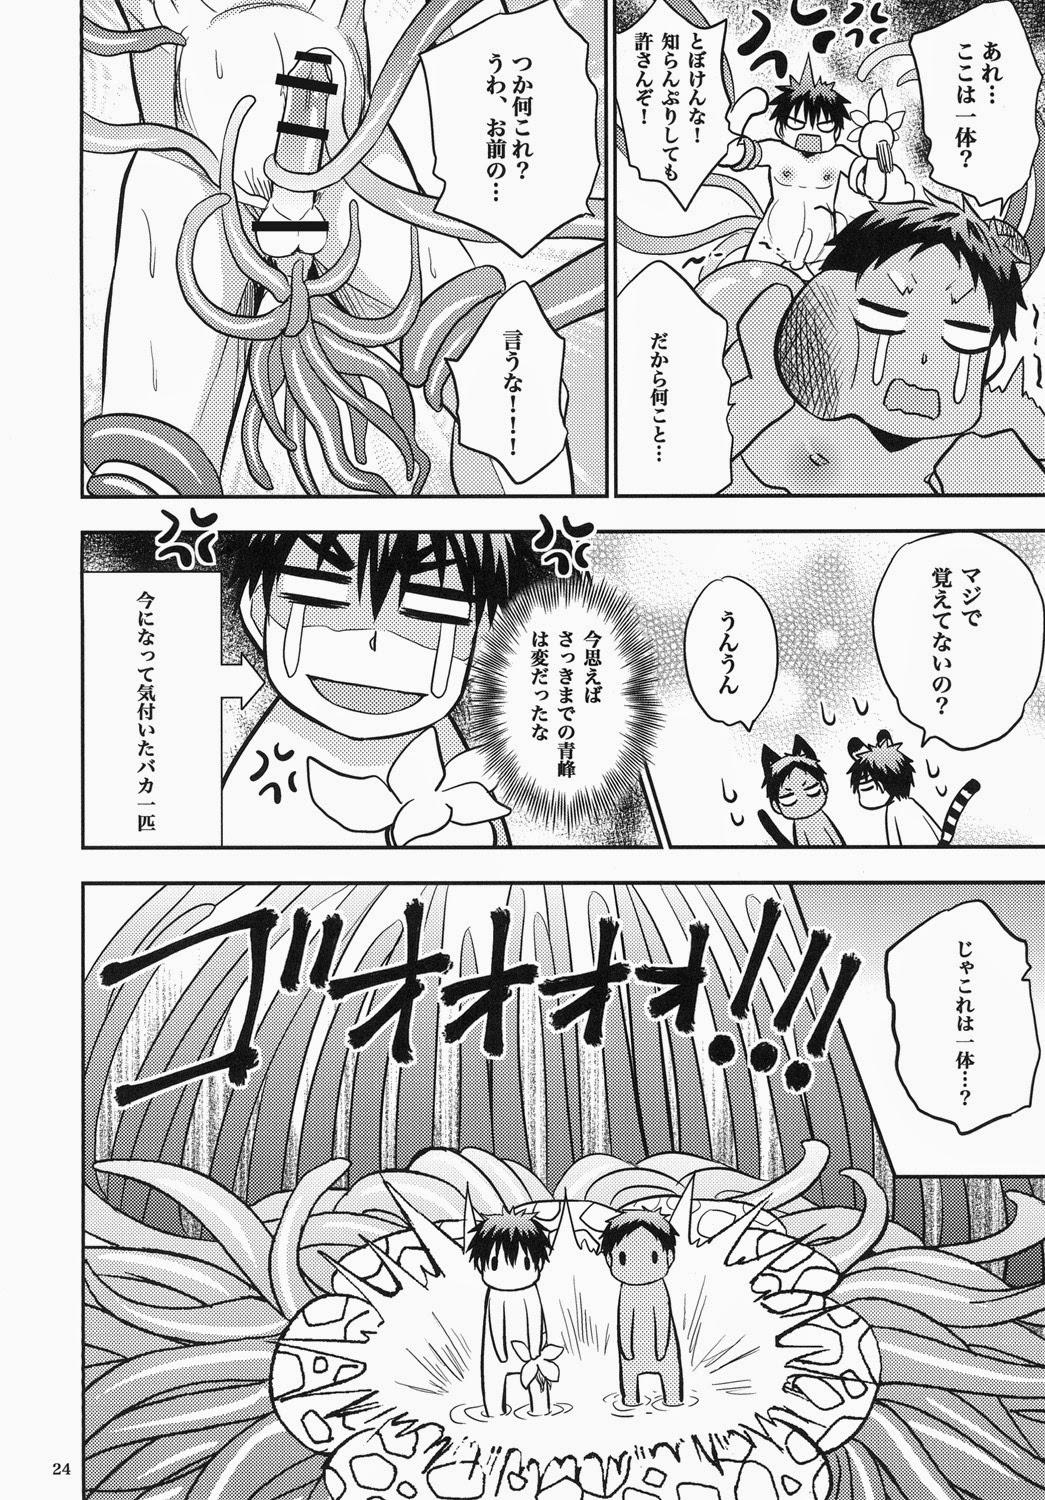 Furry 蜜の檻に溺れて - Kuroko no basuke Hardcorend - Page 19